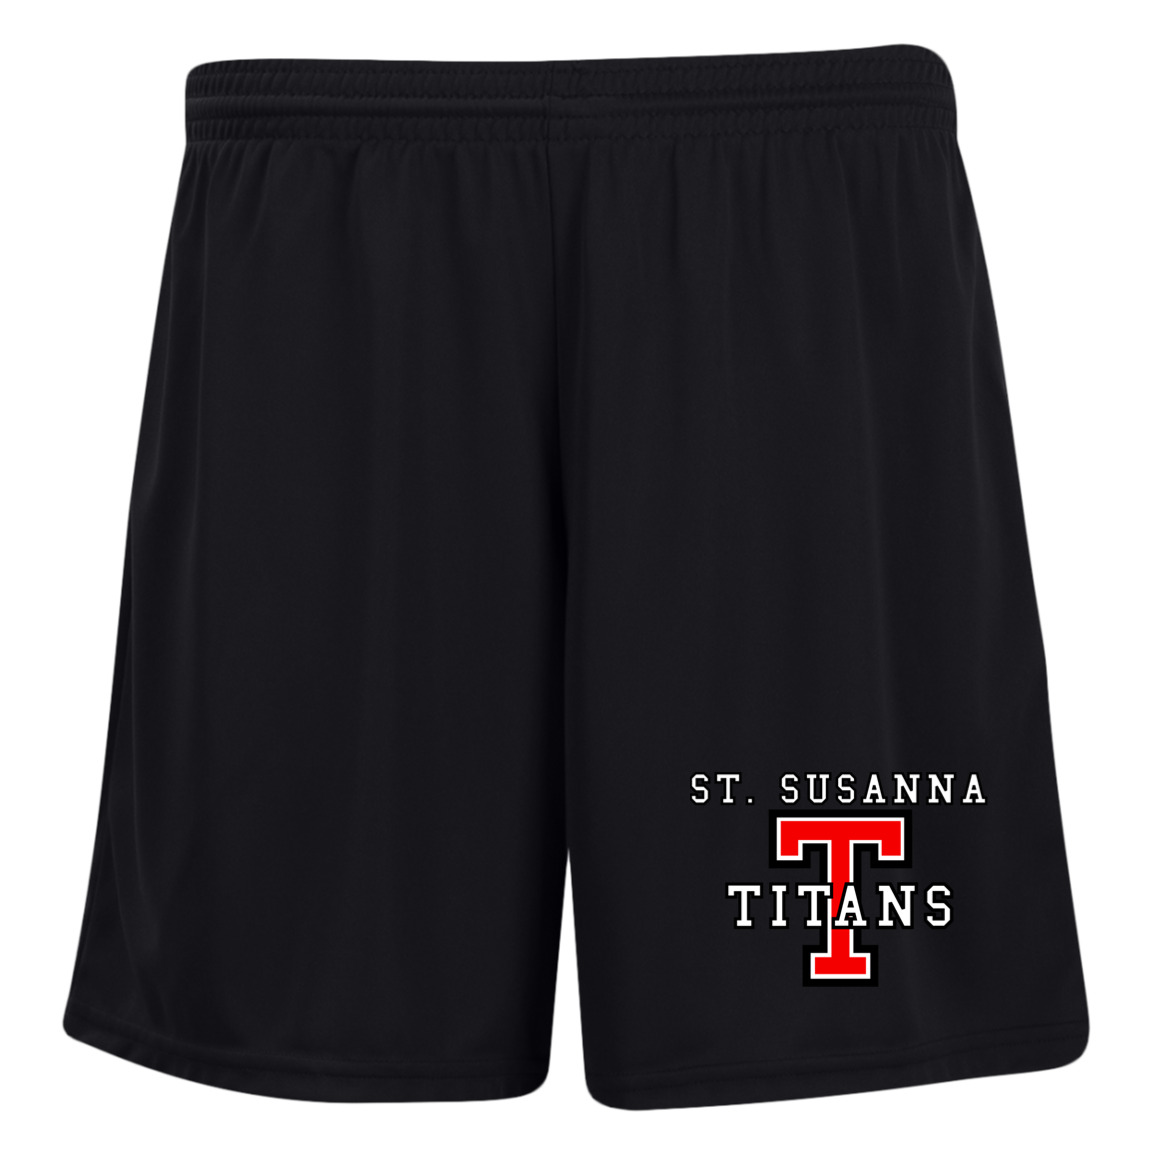 St. Susanna Titans T Ladies' Moisture-Wicking 7 inch Inseam Training Shorts